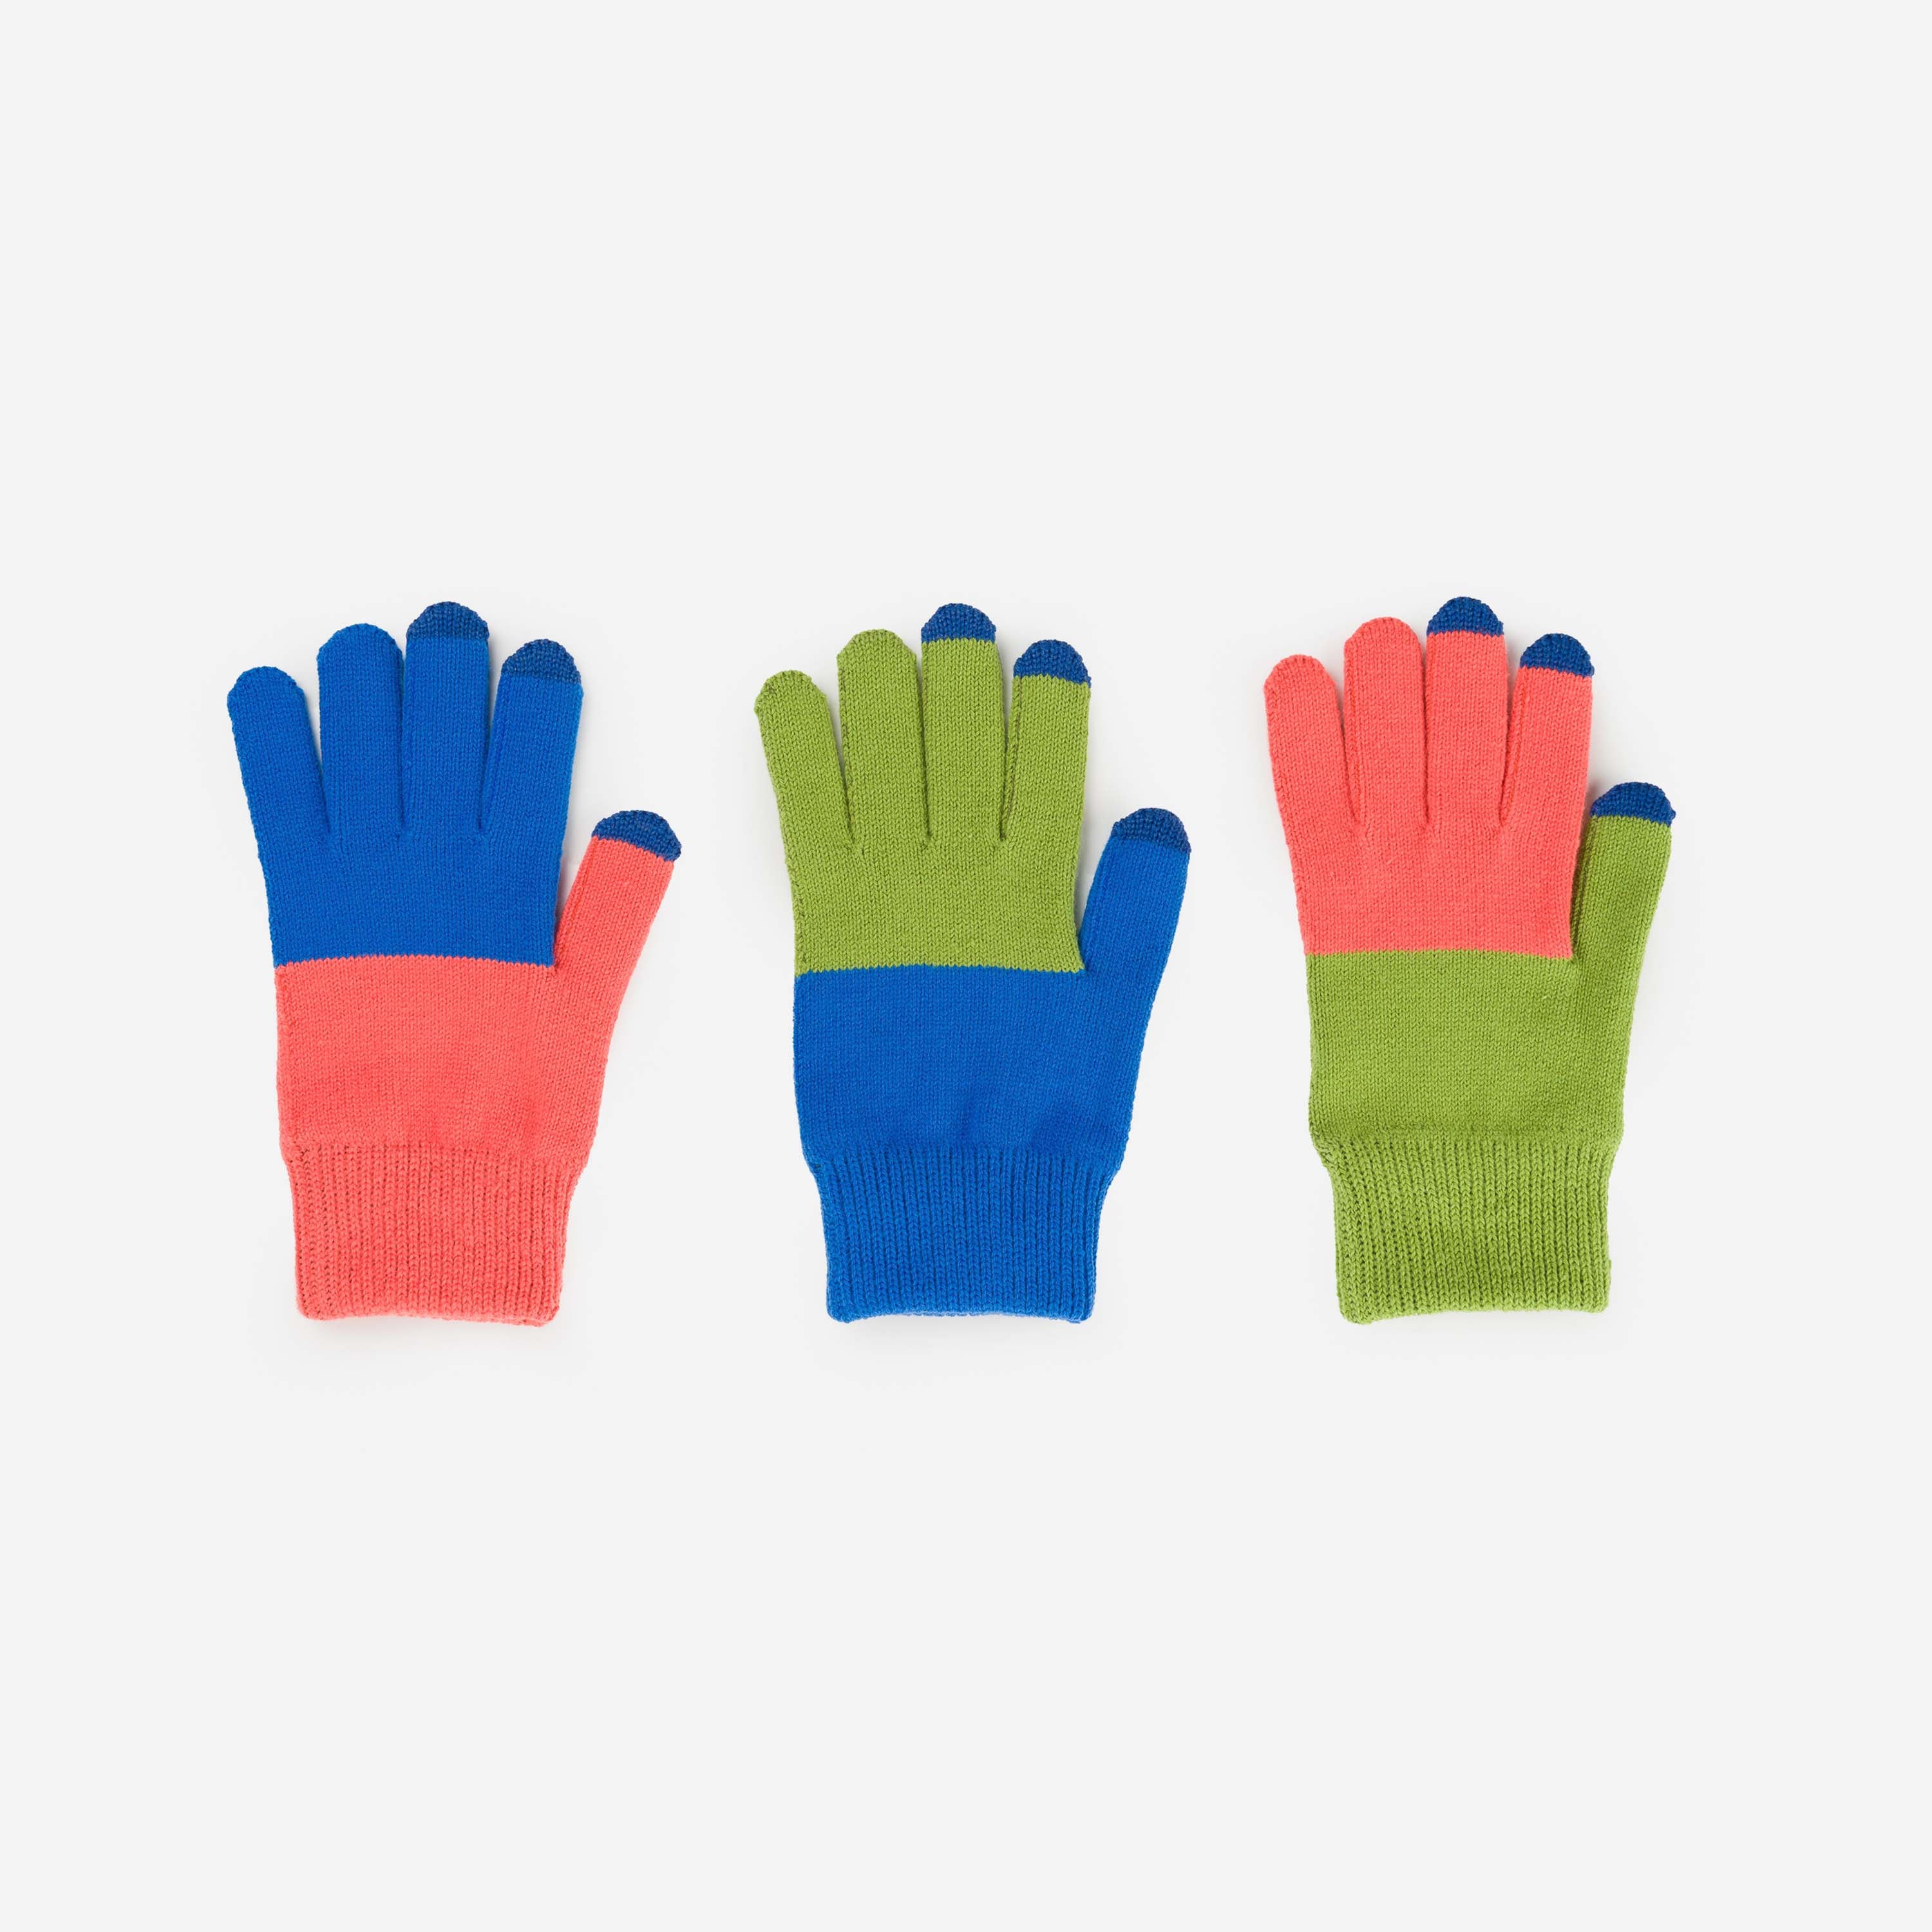 Nylon Acrylic Magic Touch Screen Gloves for iPhone iPad - China